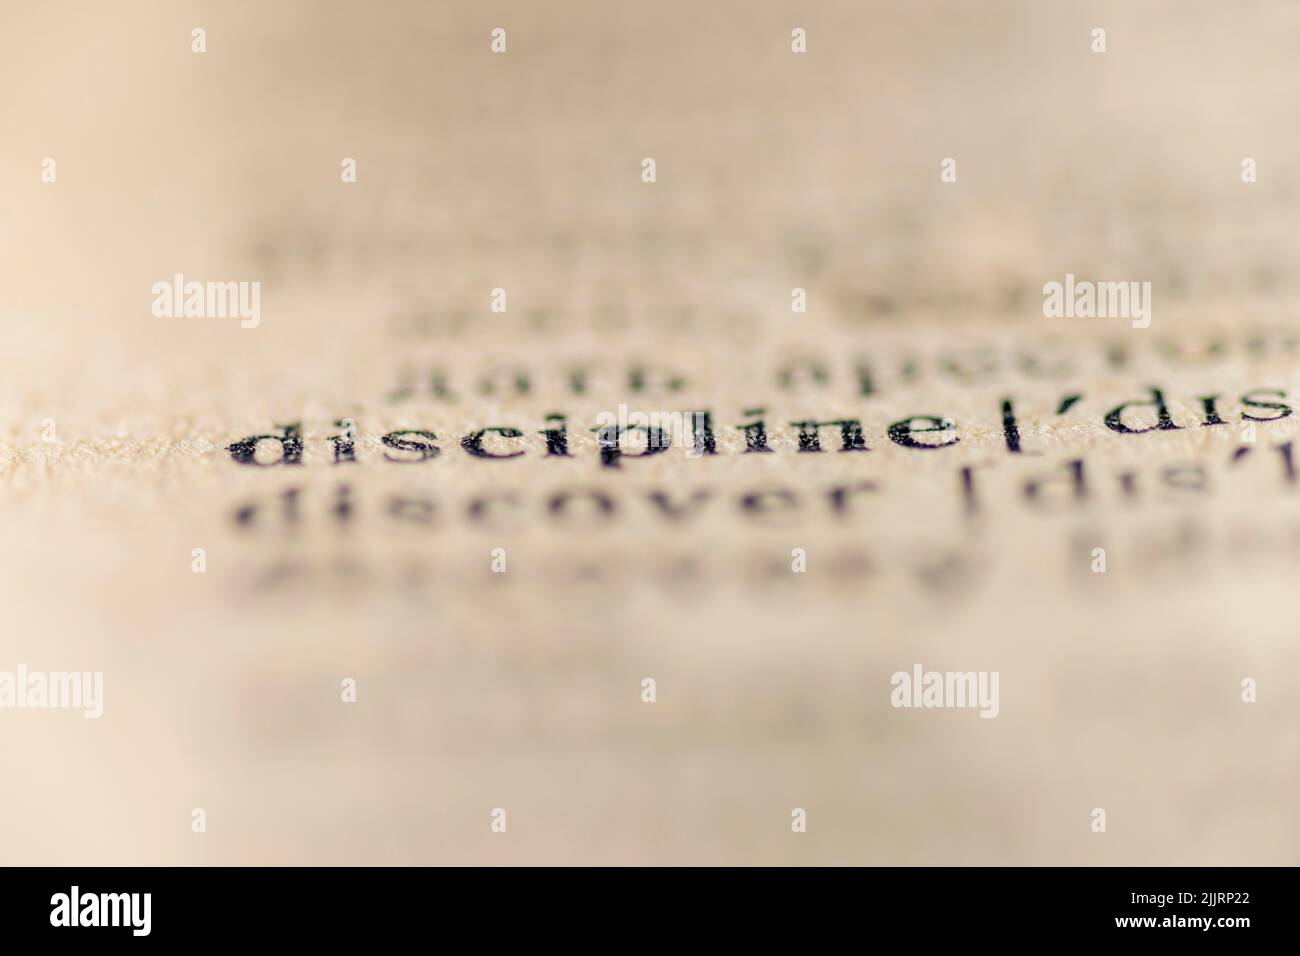 focus on discipline word printed inside vintage vocabulary Stock Photo